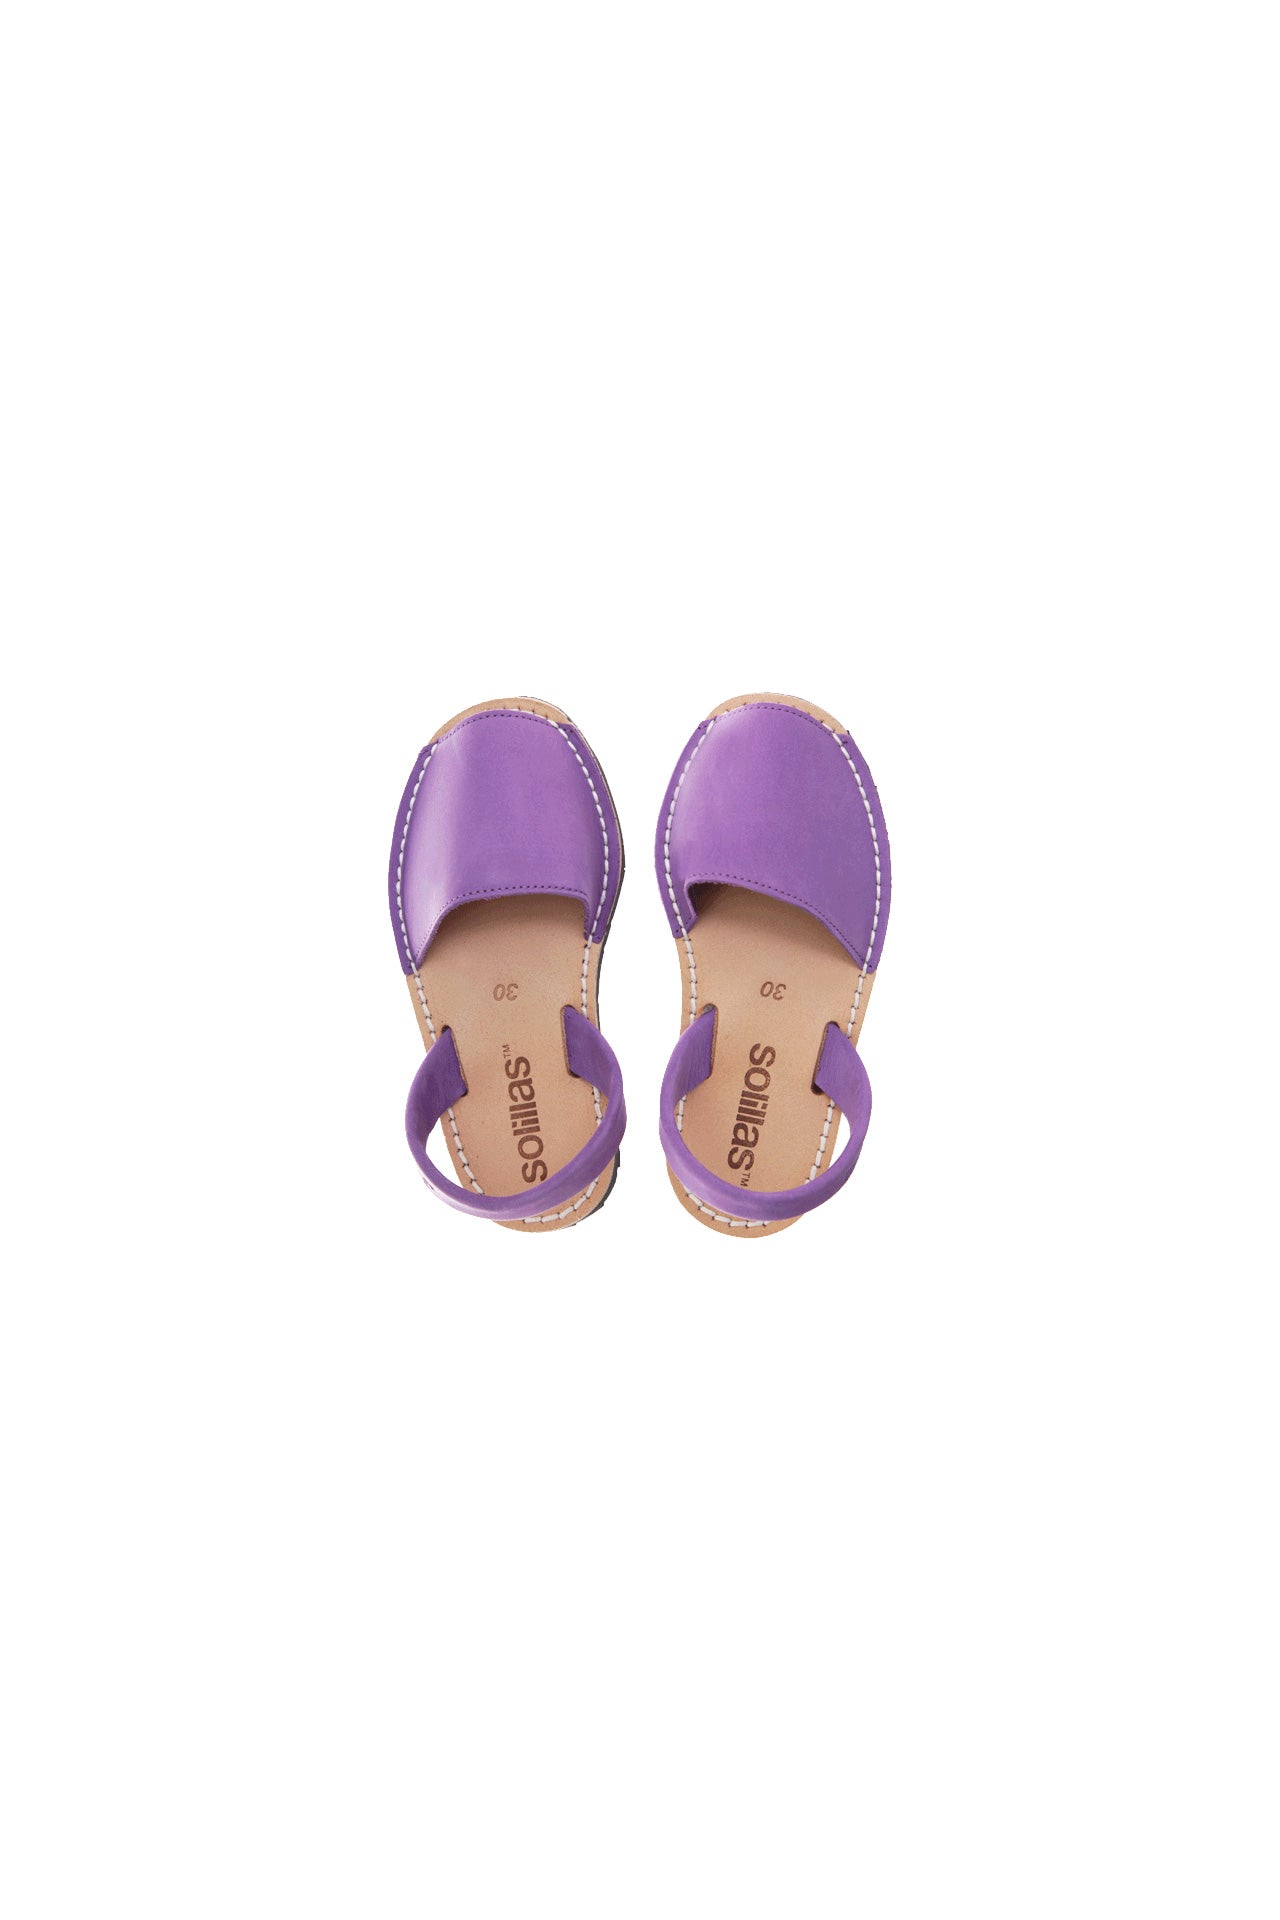 Princesa - Purple Nubuck Children's Menorcan Sandals